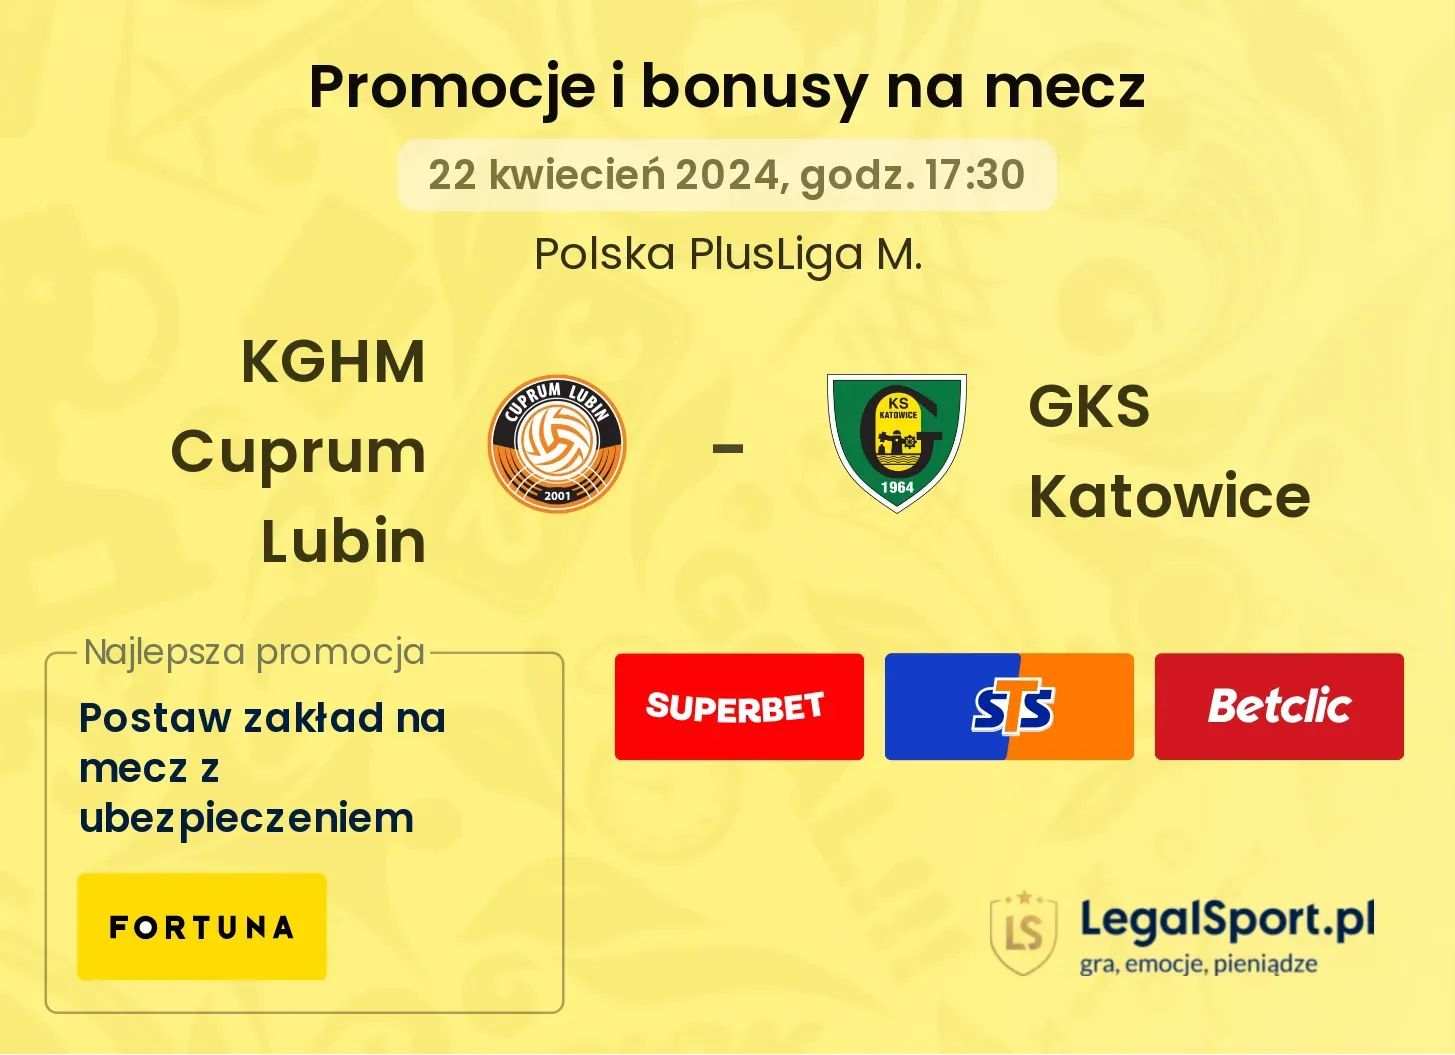 KGHM Cuprum Lubin - GKS Katowice promocje bonusy na mecz